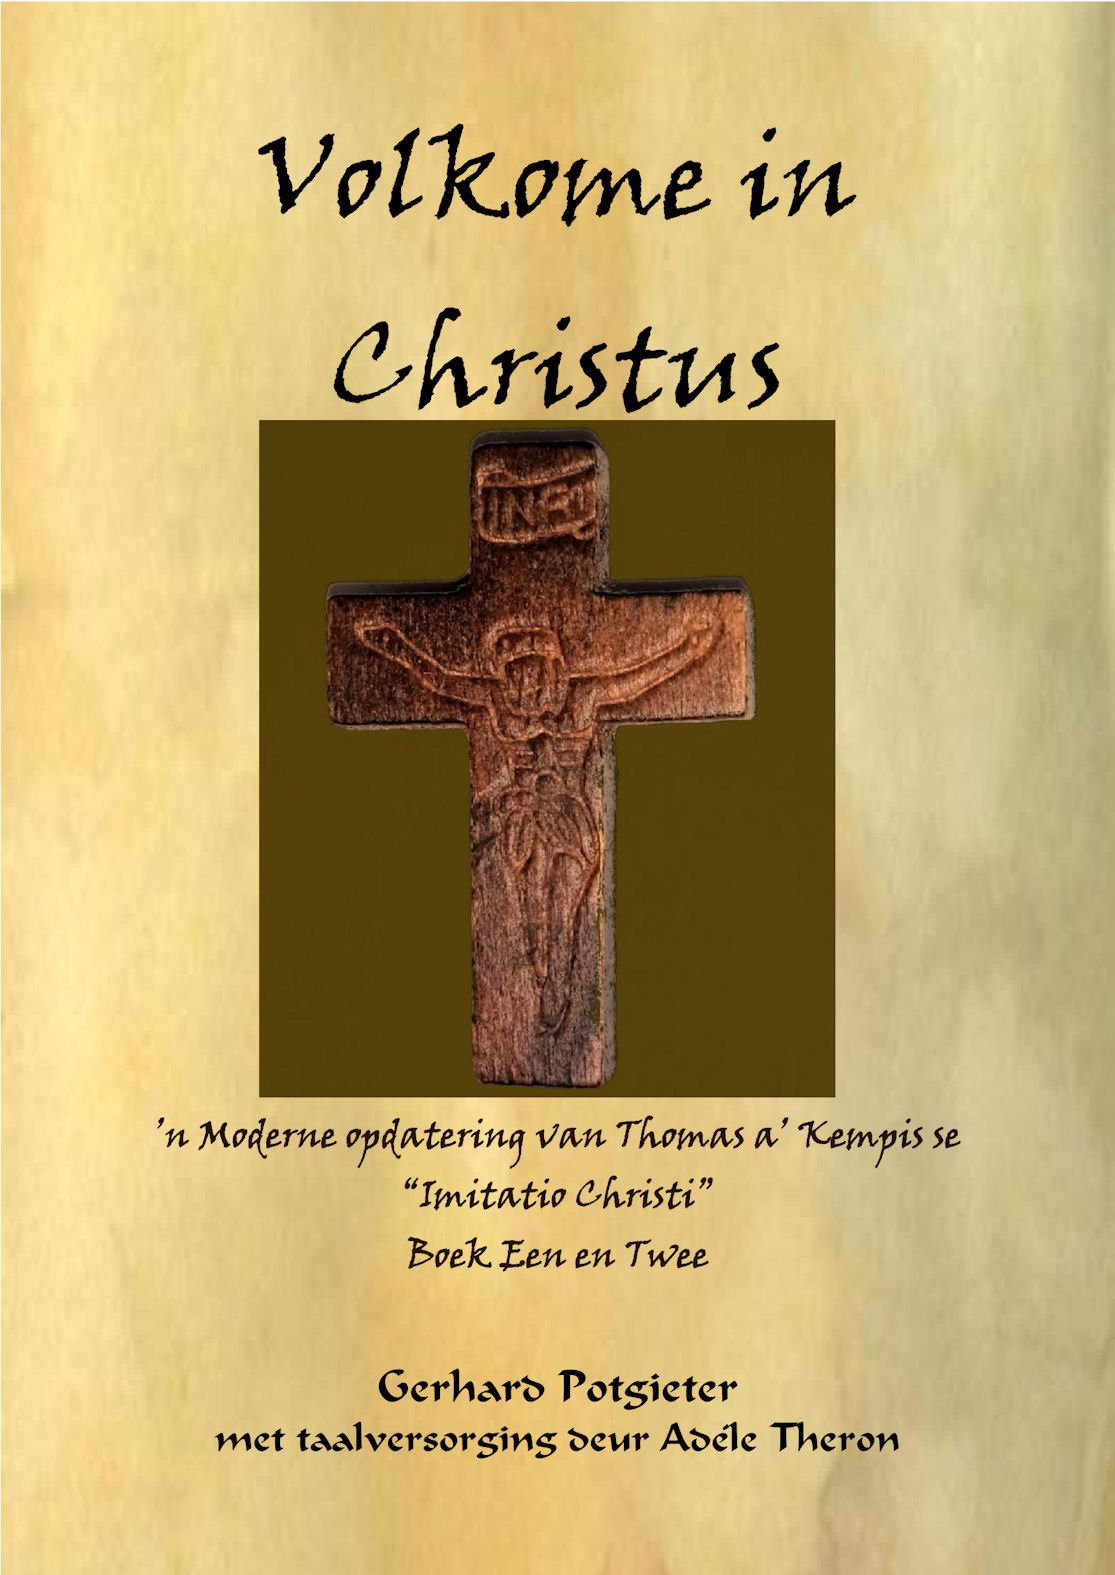 Volkome in Christus: Boek een en Twee van Thomas Kempis se 